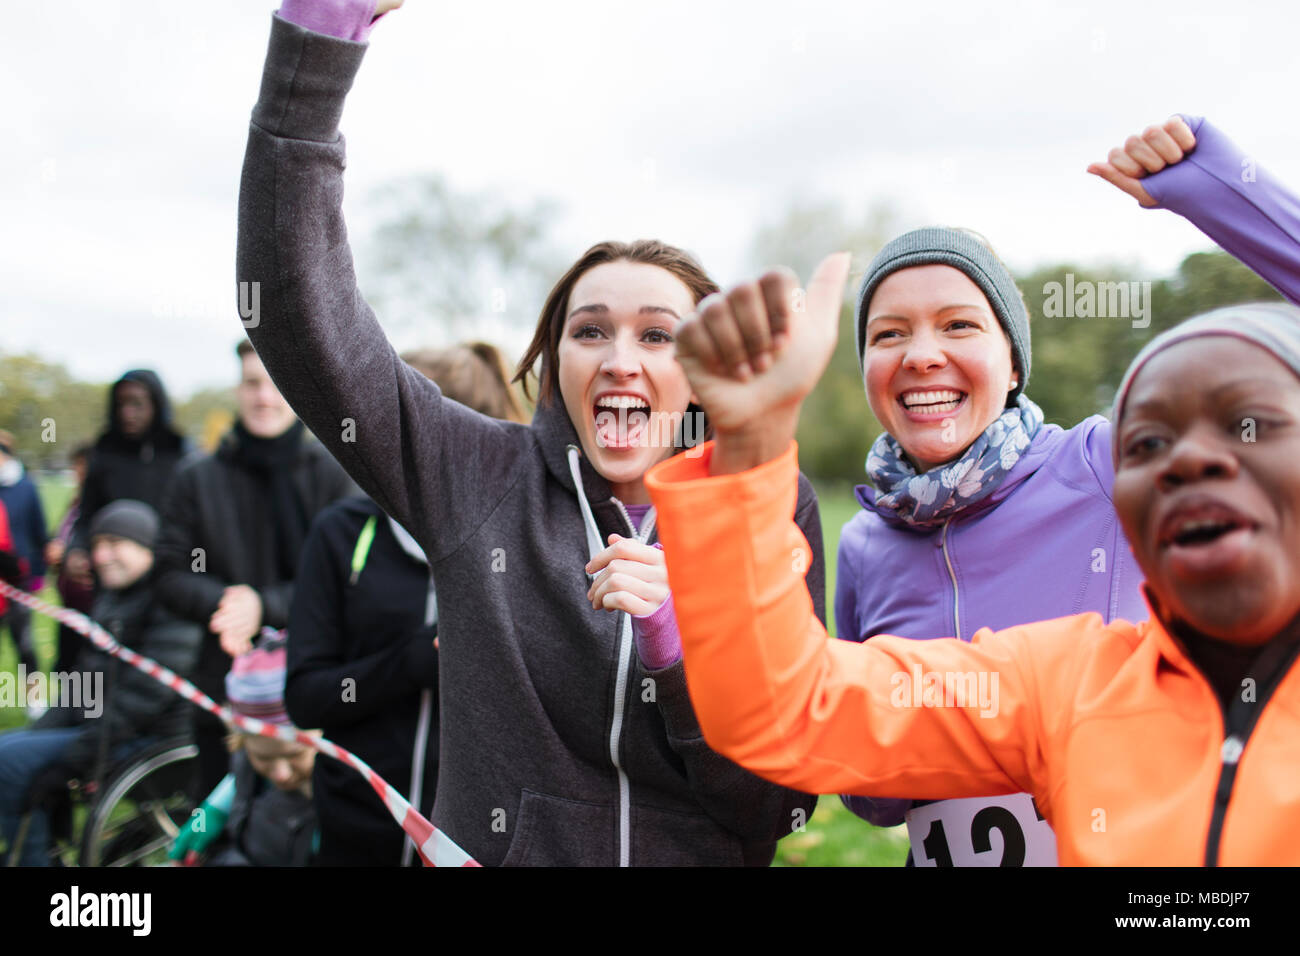 Enthusiastic female spectators cheering at charity run Stock Photo